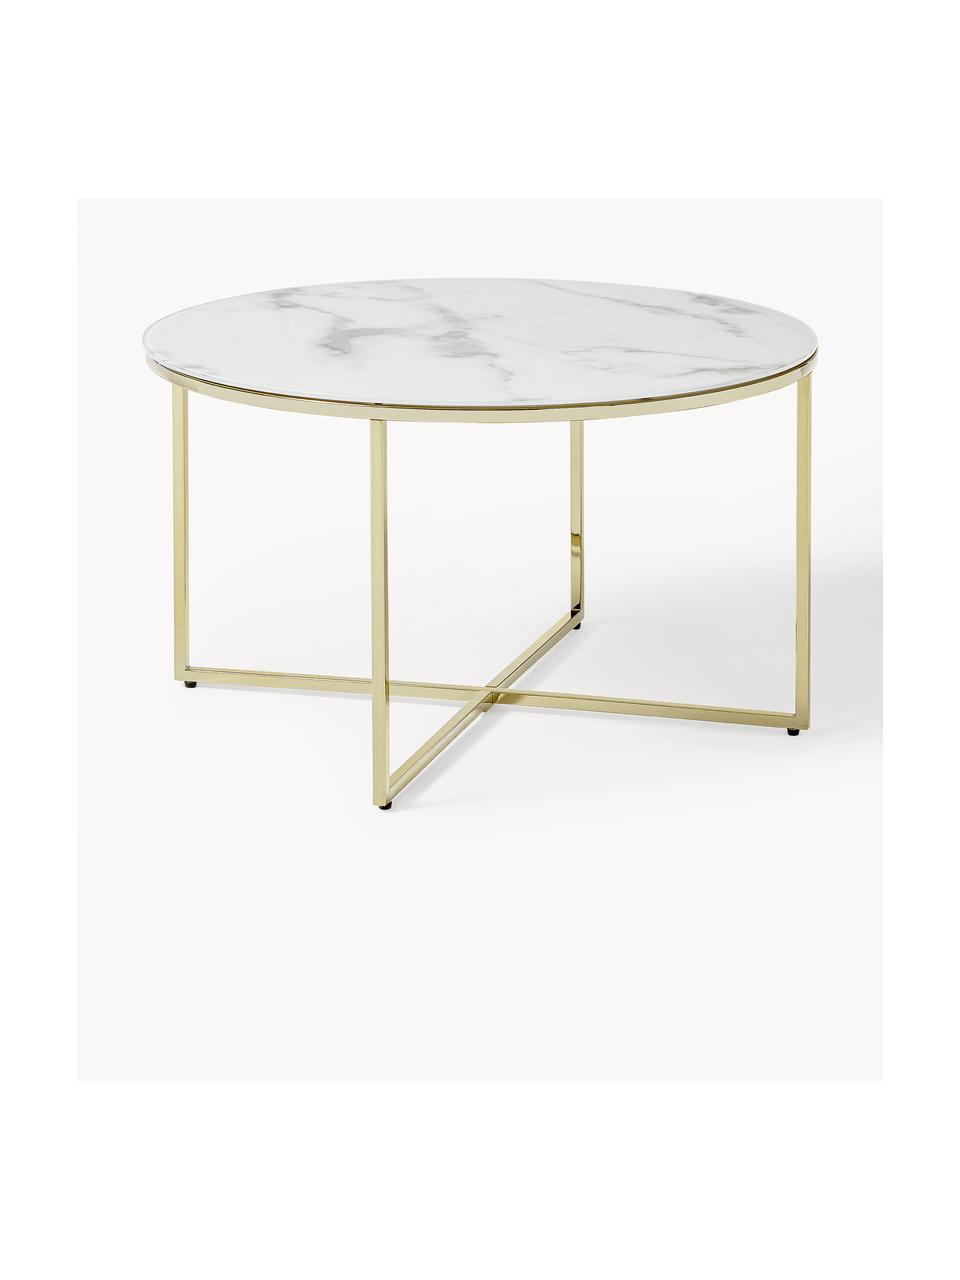 Table basse ronde look marbre Antigua, Blanc look marbre, doré, Ø 80 cm